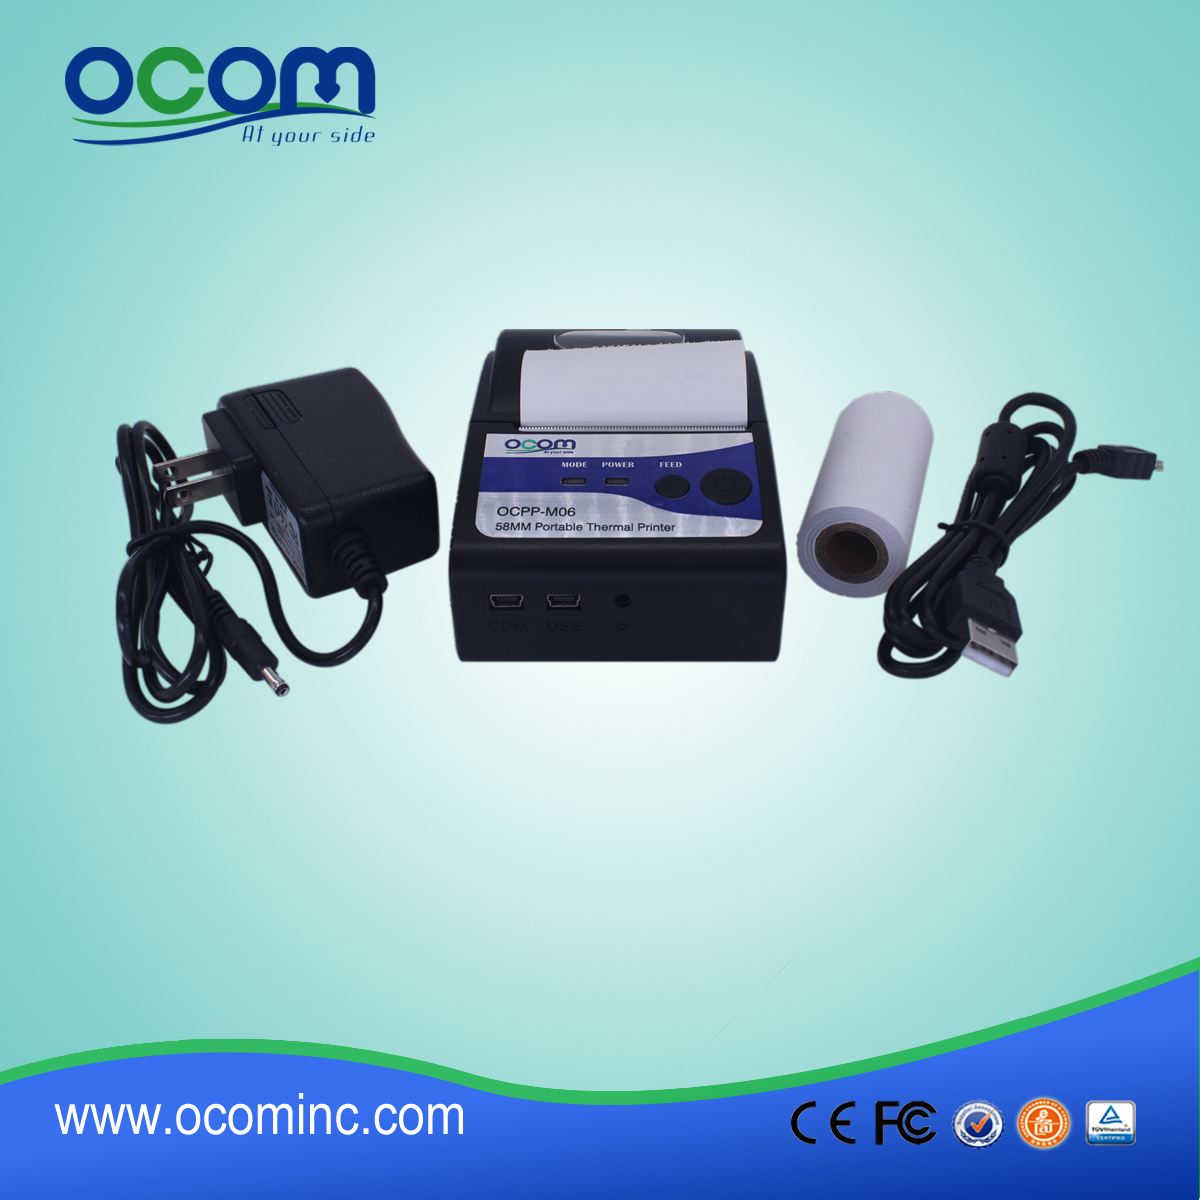 (OCPP-M06) OCOM 2015 حار بيع الروبوت بلوتوث الطابعة المحمولة